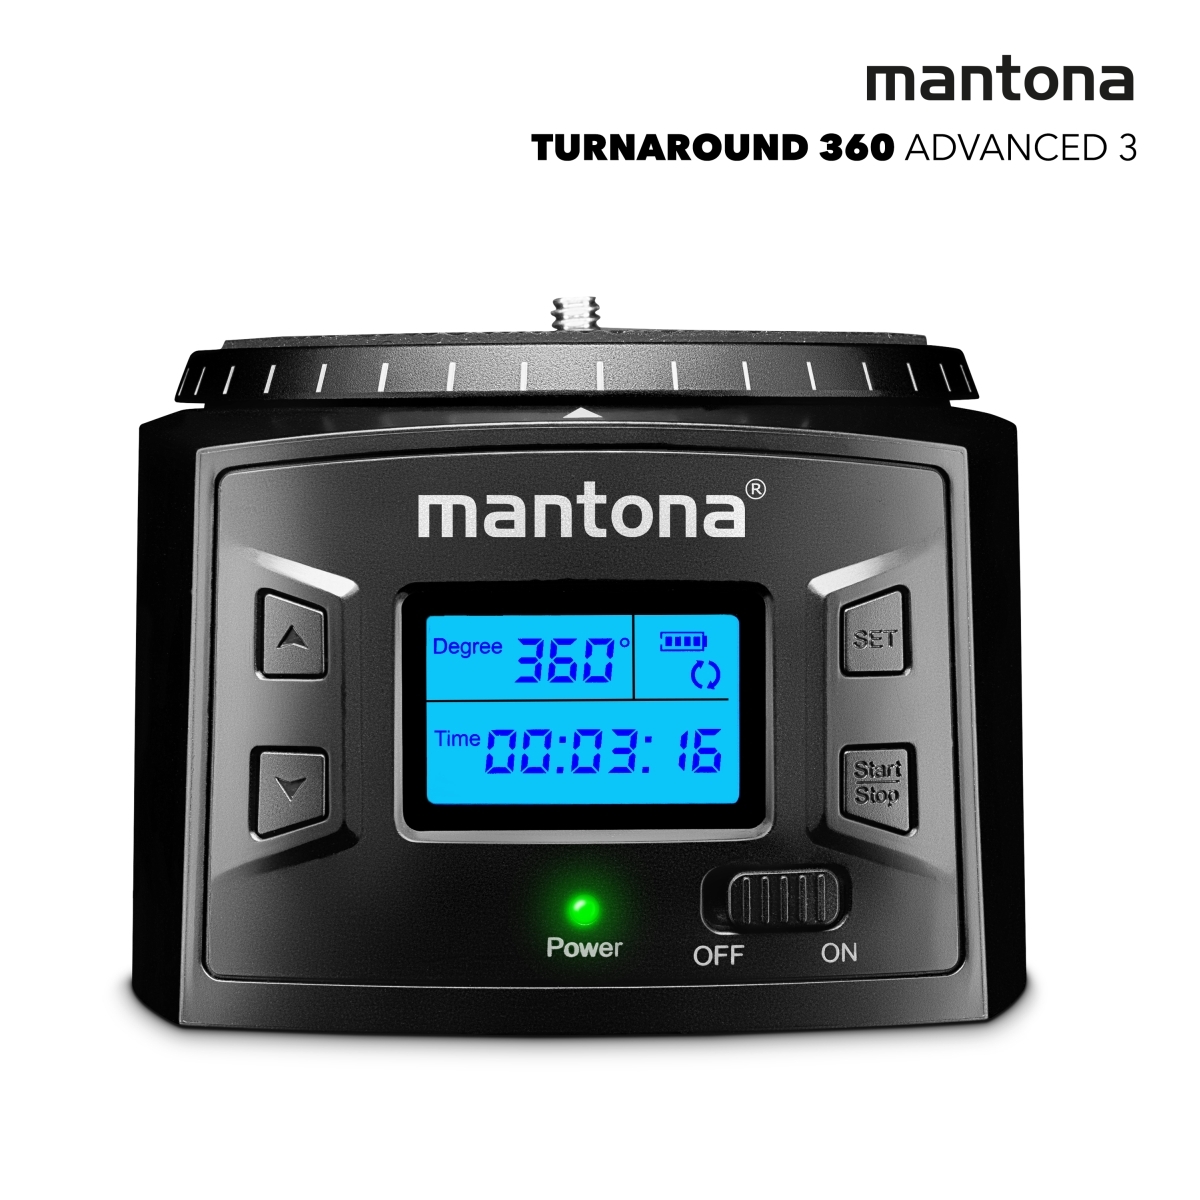 Mantona Turnaround 360 Advanced 3 - testa panoramica elettrica